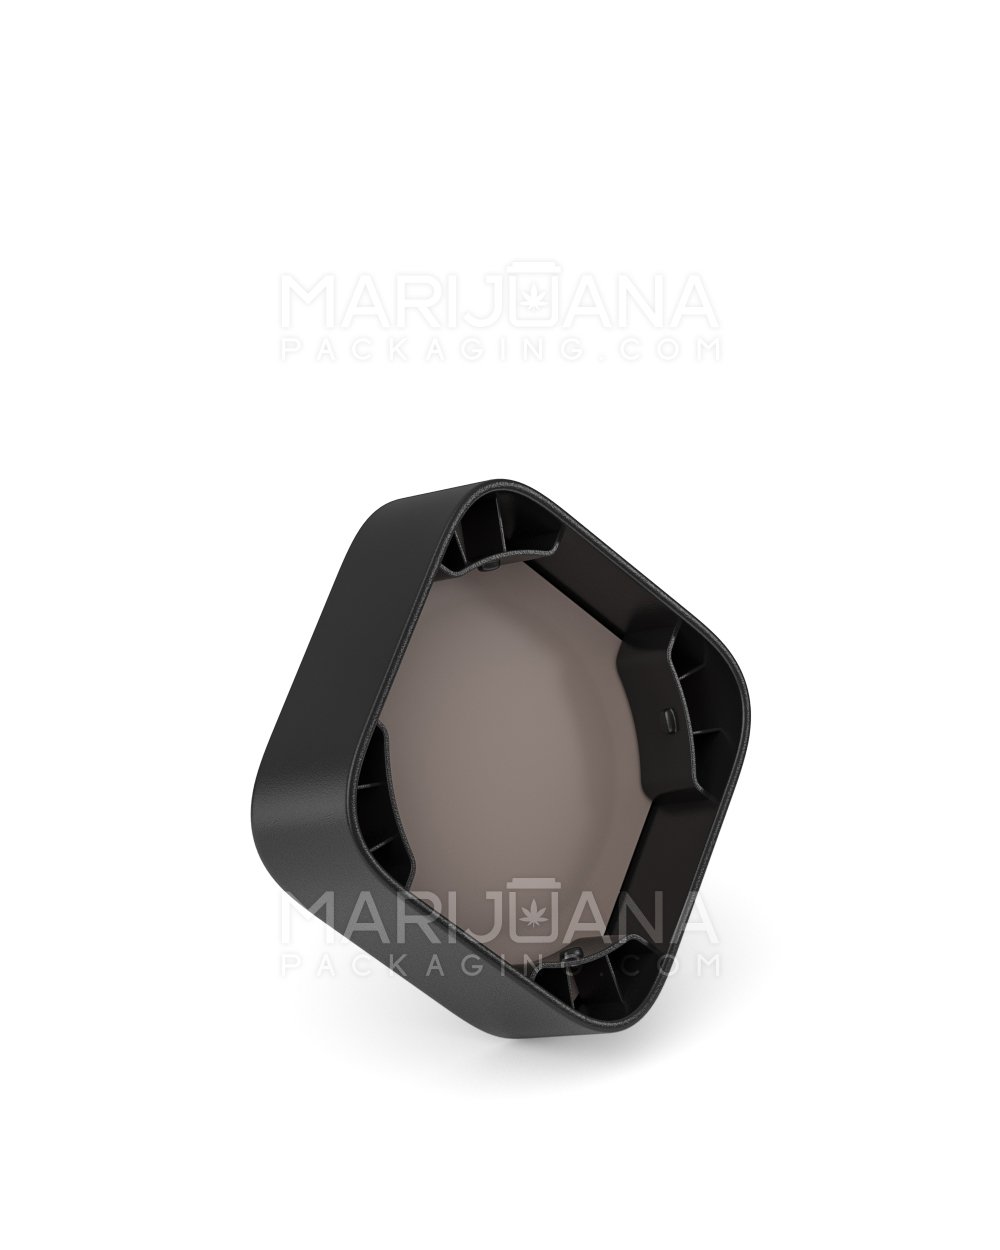 Child Resistant | Qube Black Glass Concentrate Jar w/ White Interior & Black Cap | 32mm - 5mL - 250 Count - 9